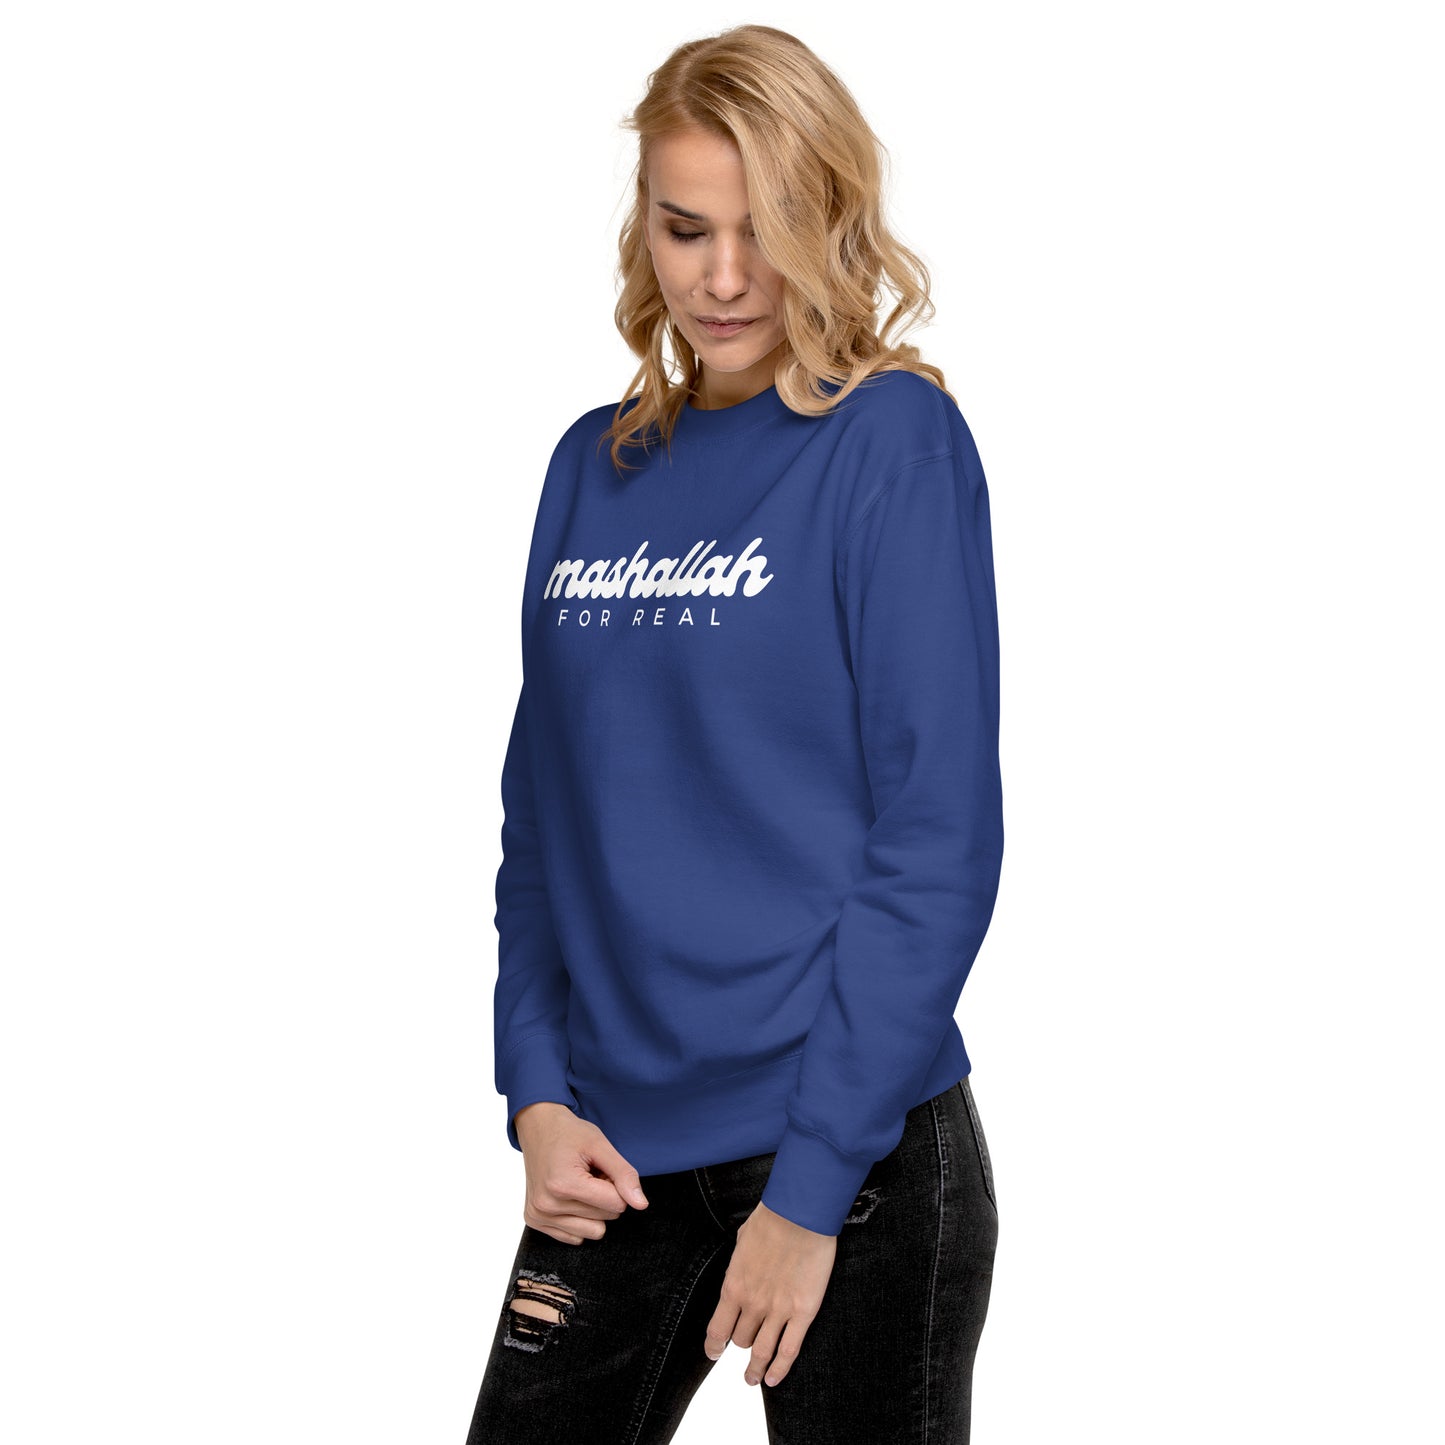 Mashallah for Real Unisex Premium Sweatshirt